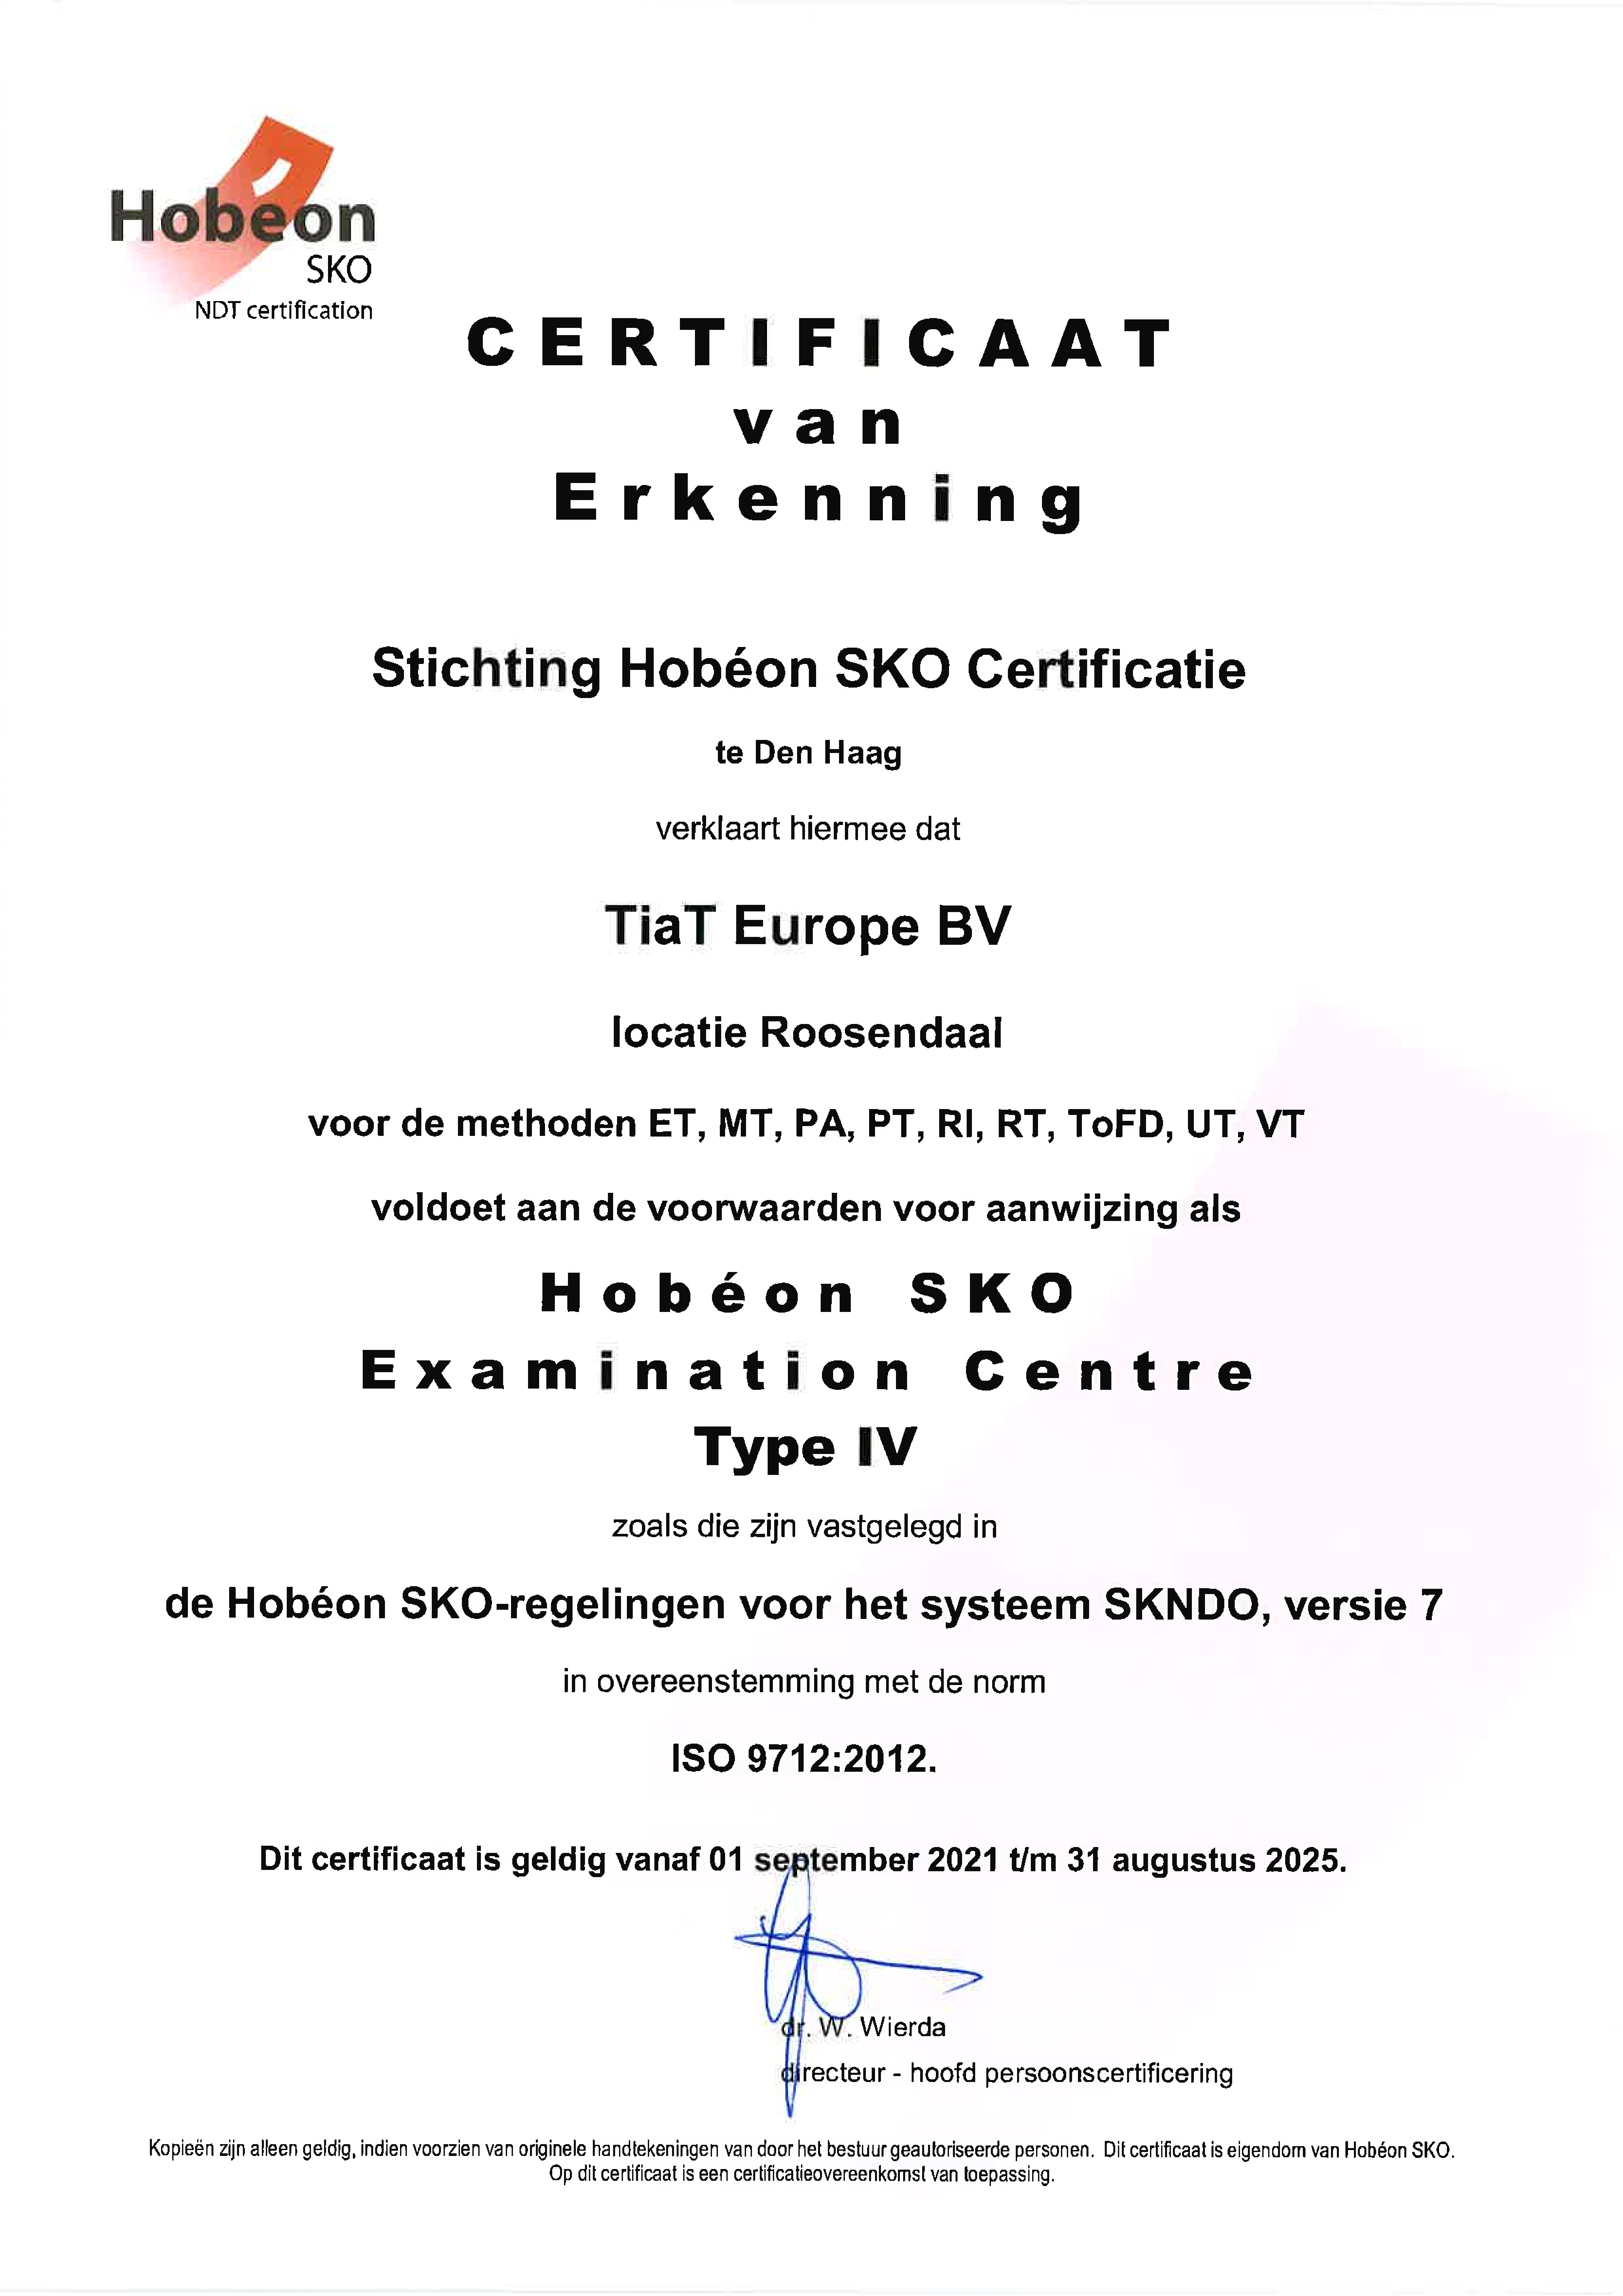 Examination Centre Type 4 – HSKO (ISO 9712)